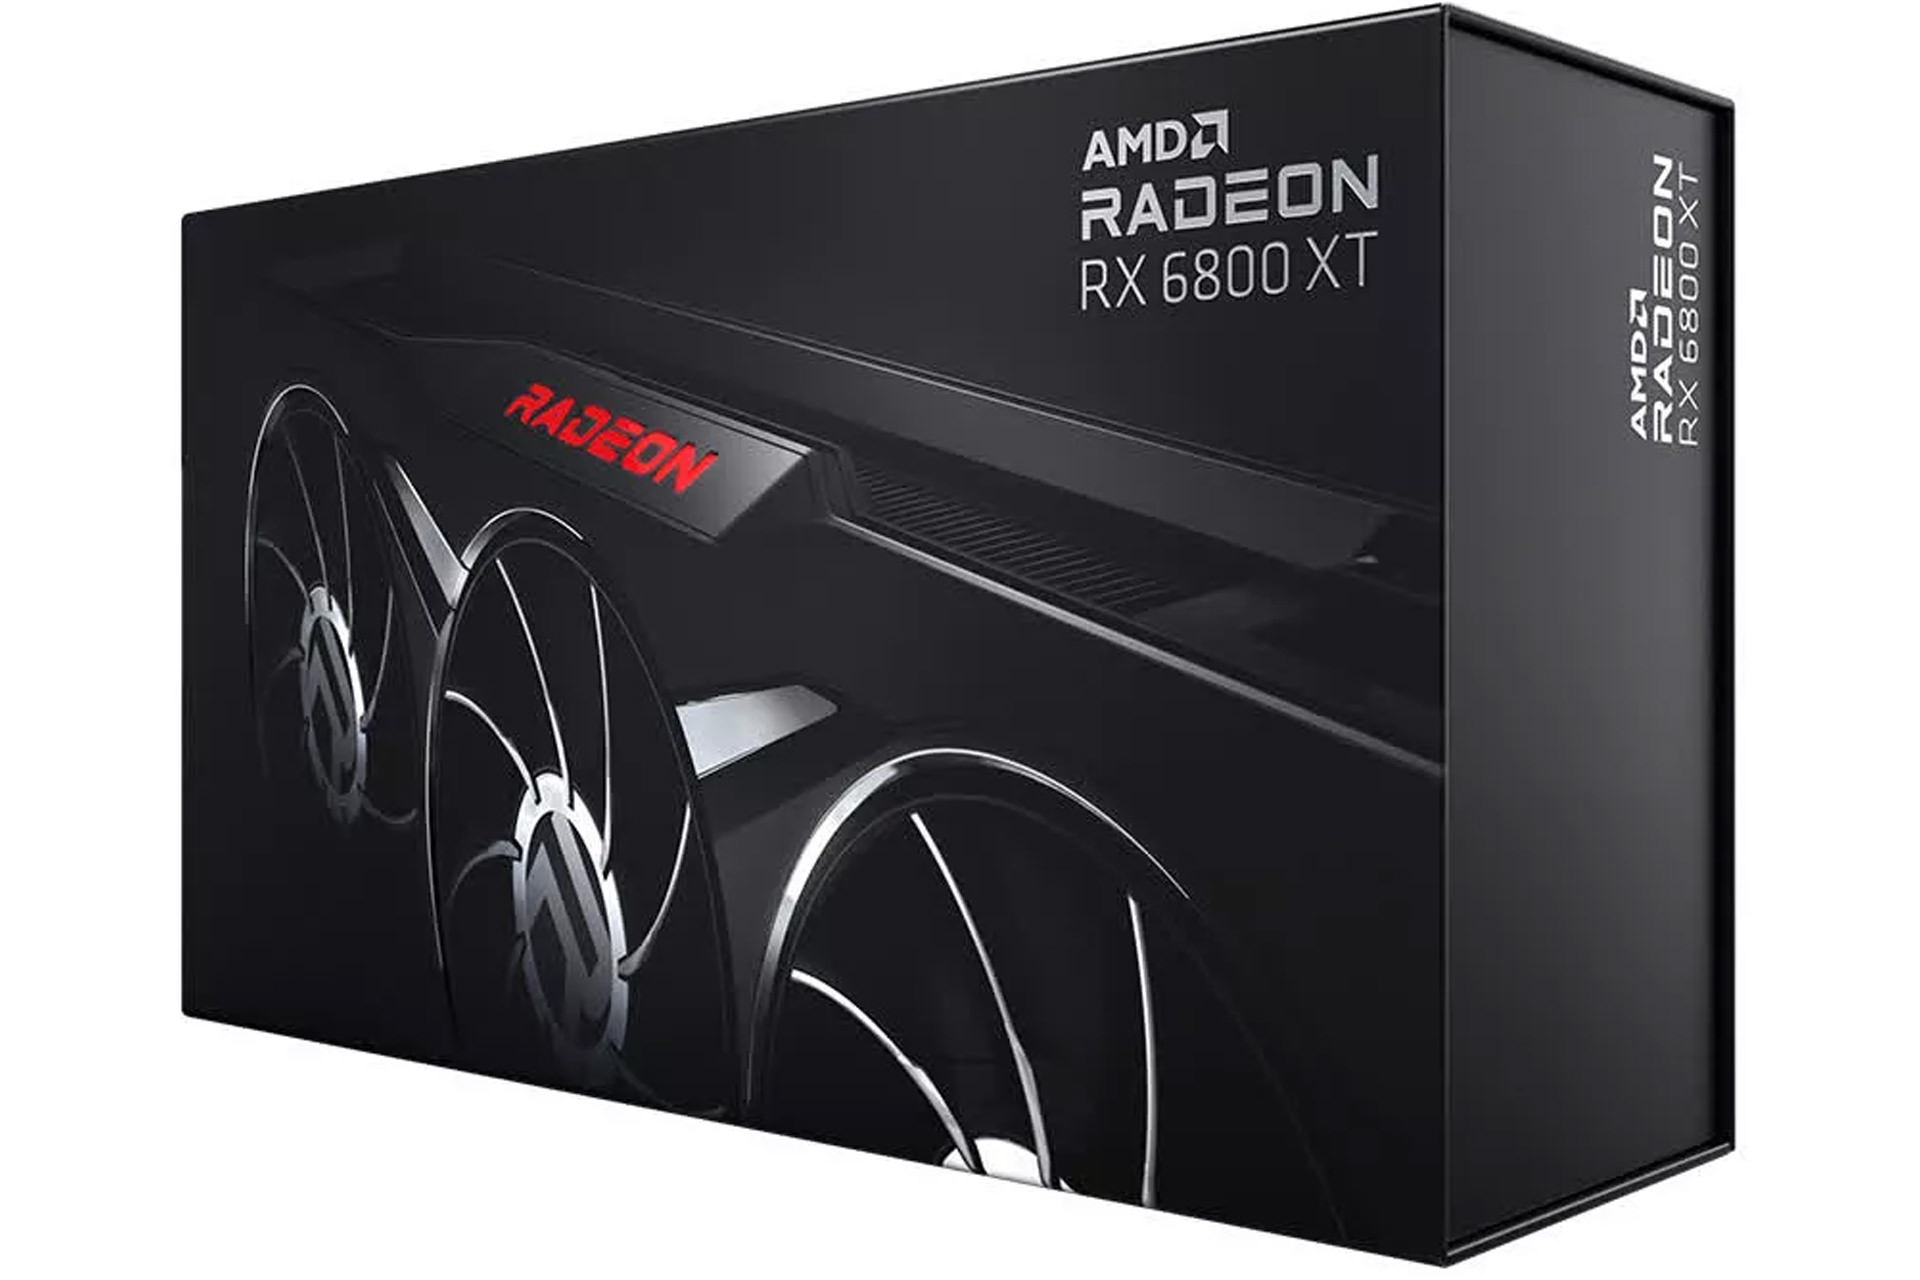 AMD مدل ویژه کارت گرافیک RX 6800 XT را عرضه کرد